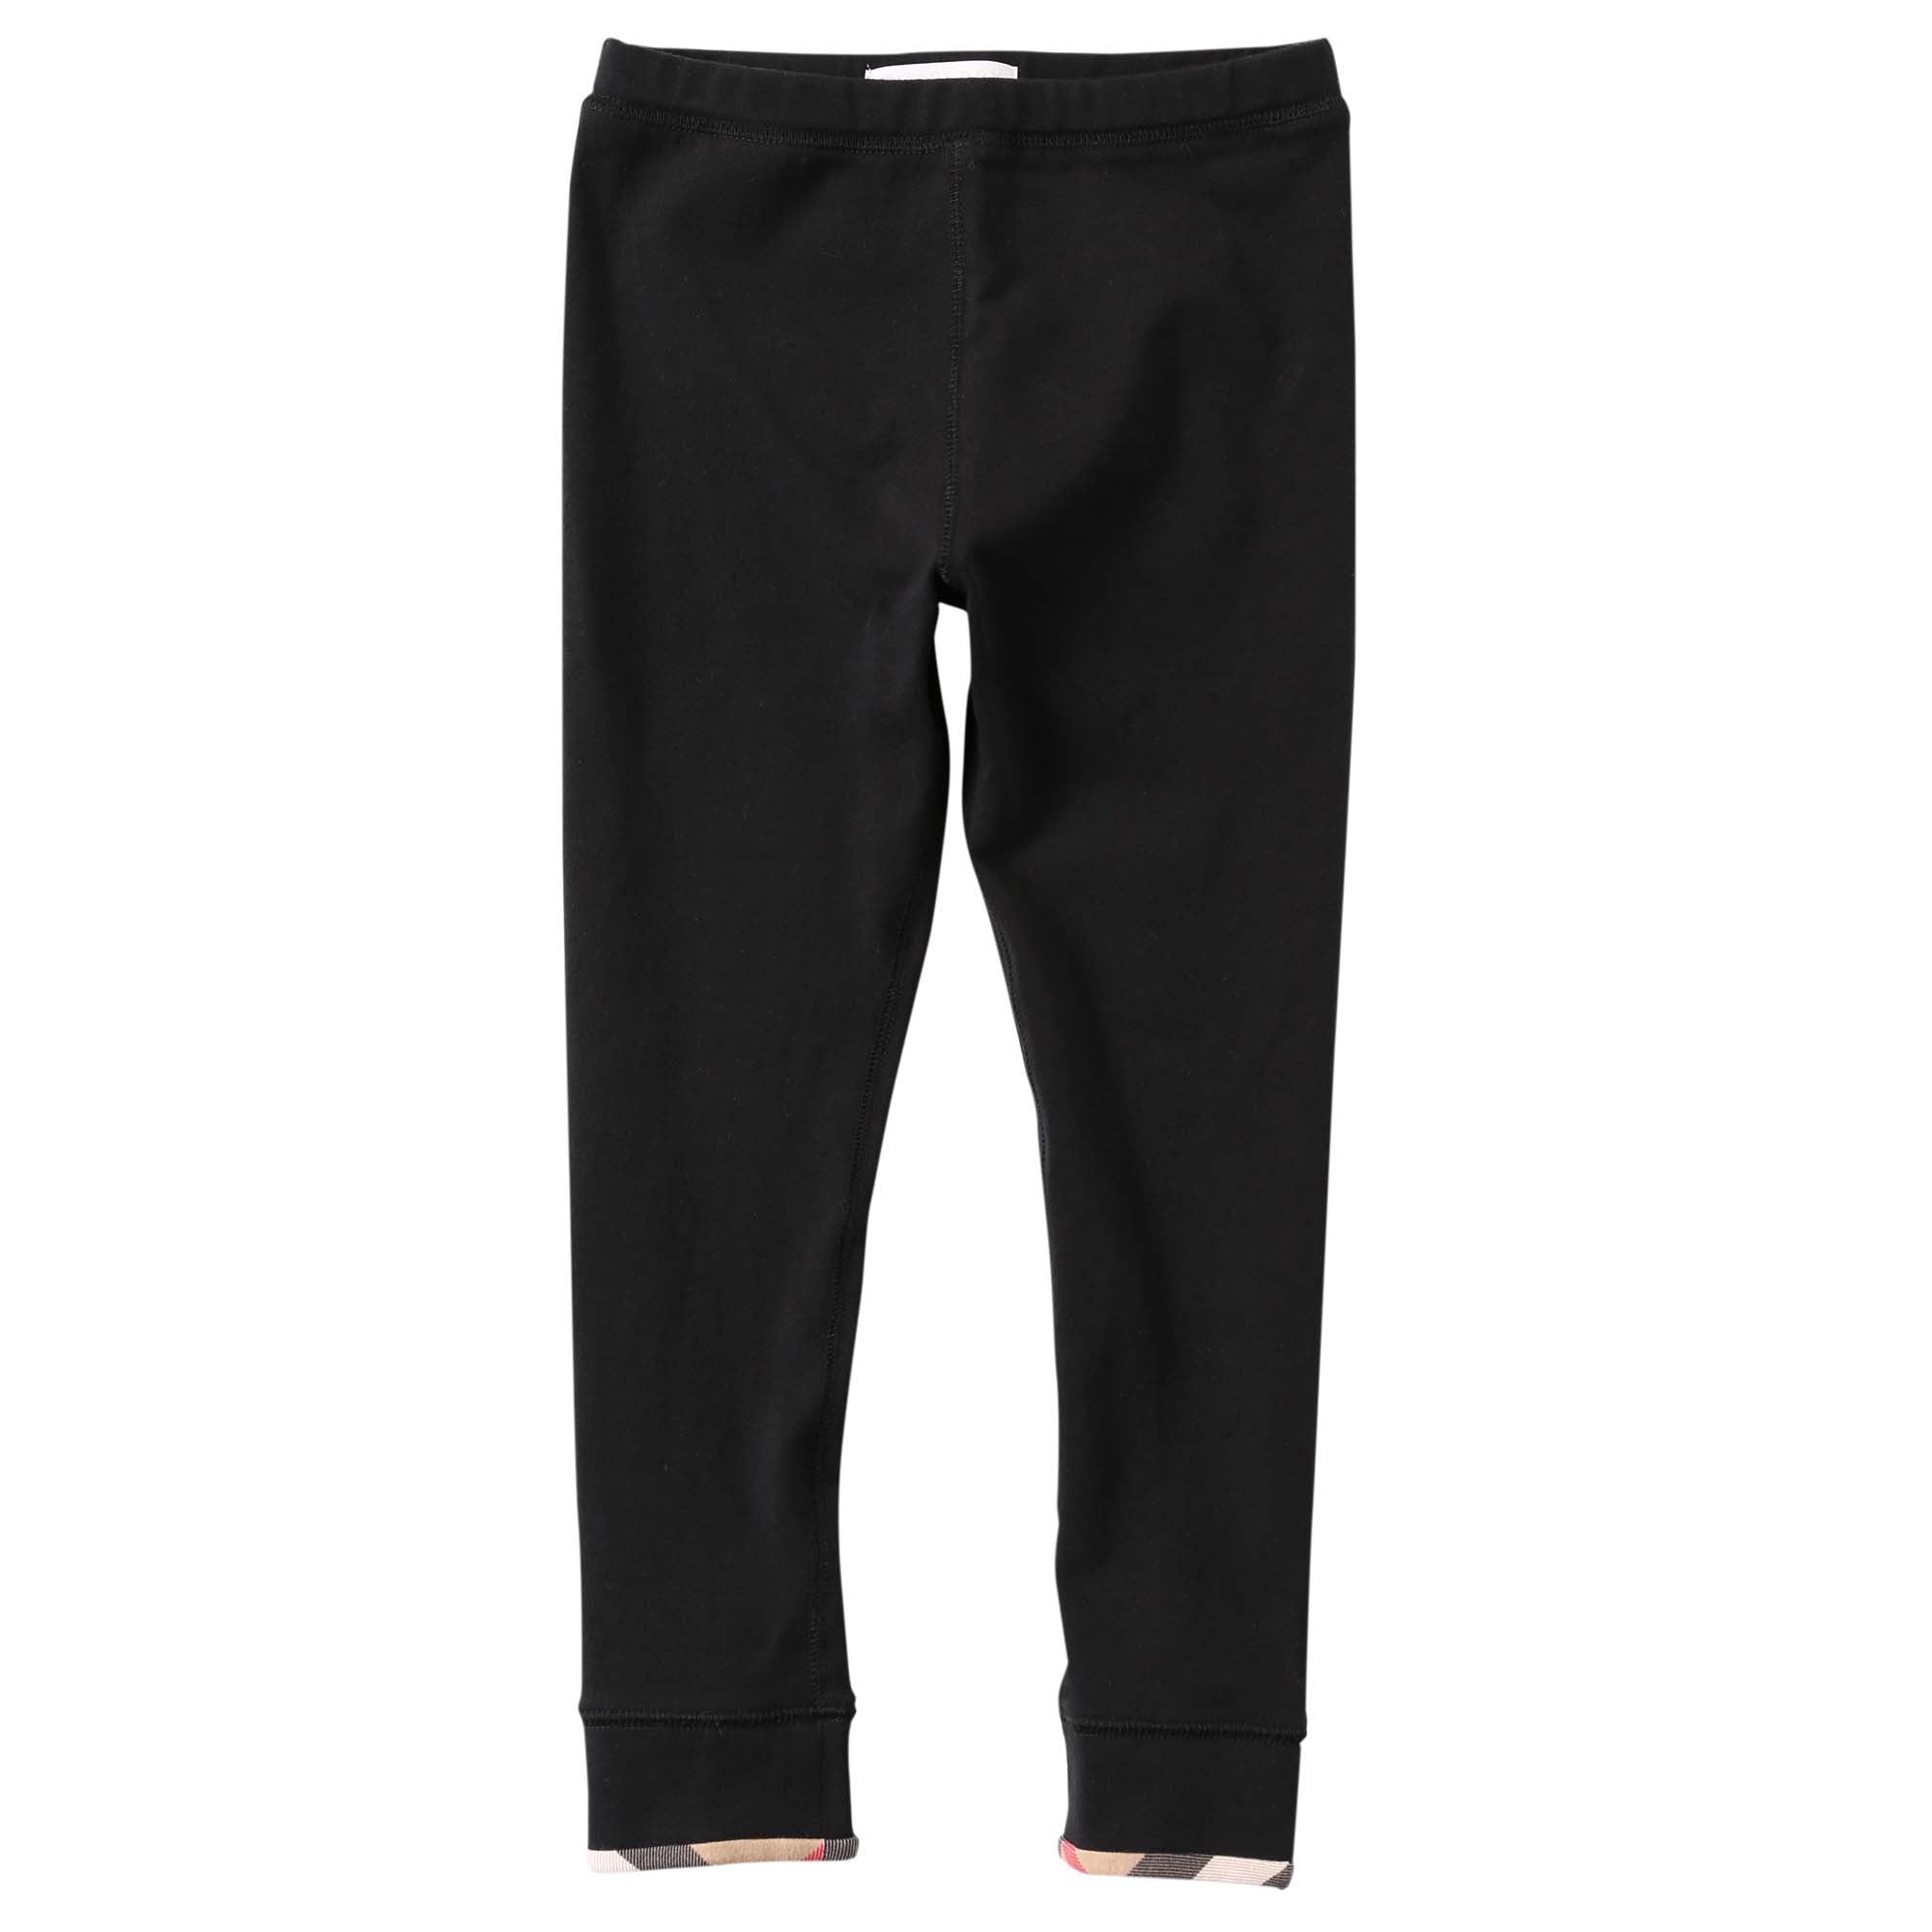 Girls Black Cotton Trouser With Check Cuffs - CÉMAROSE | Children's Fashion Store - 1